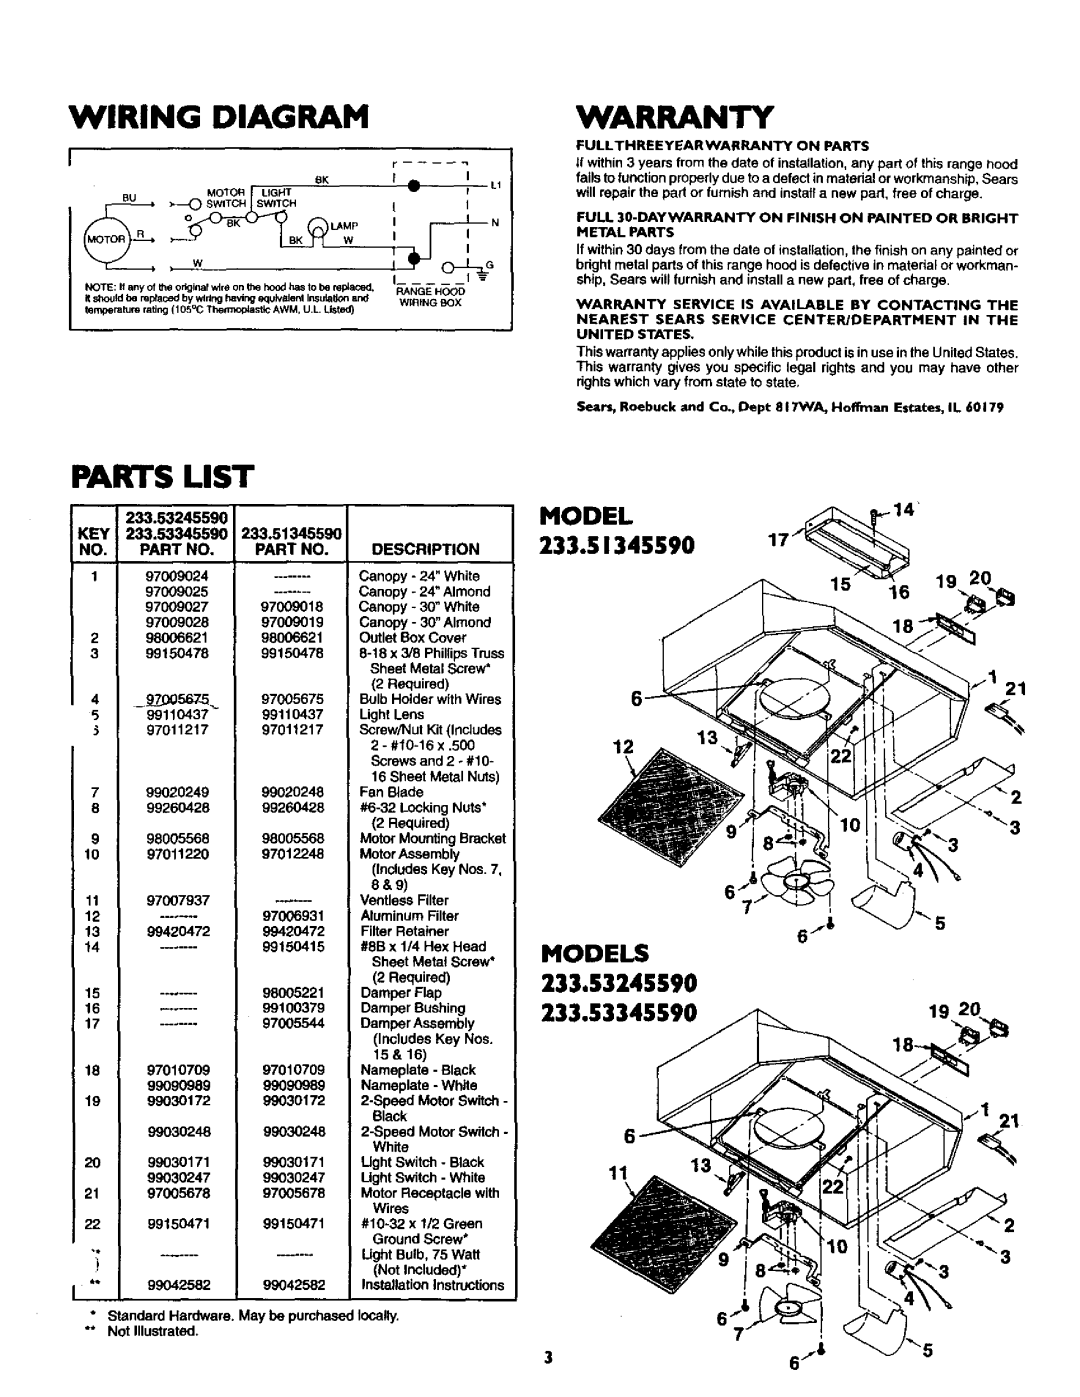 Sears 233.5334559, 233.5134559, 233.5324559 owner manual Wiring, Diagram, Warranty, Parts List, Models, 30003030 